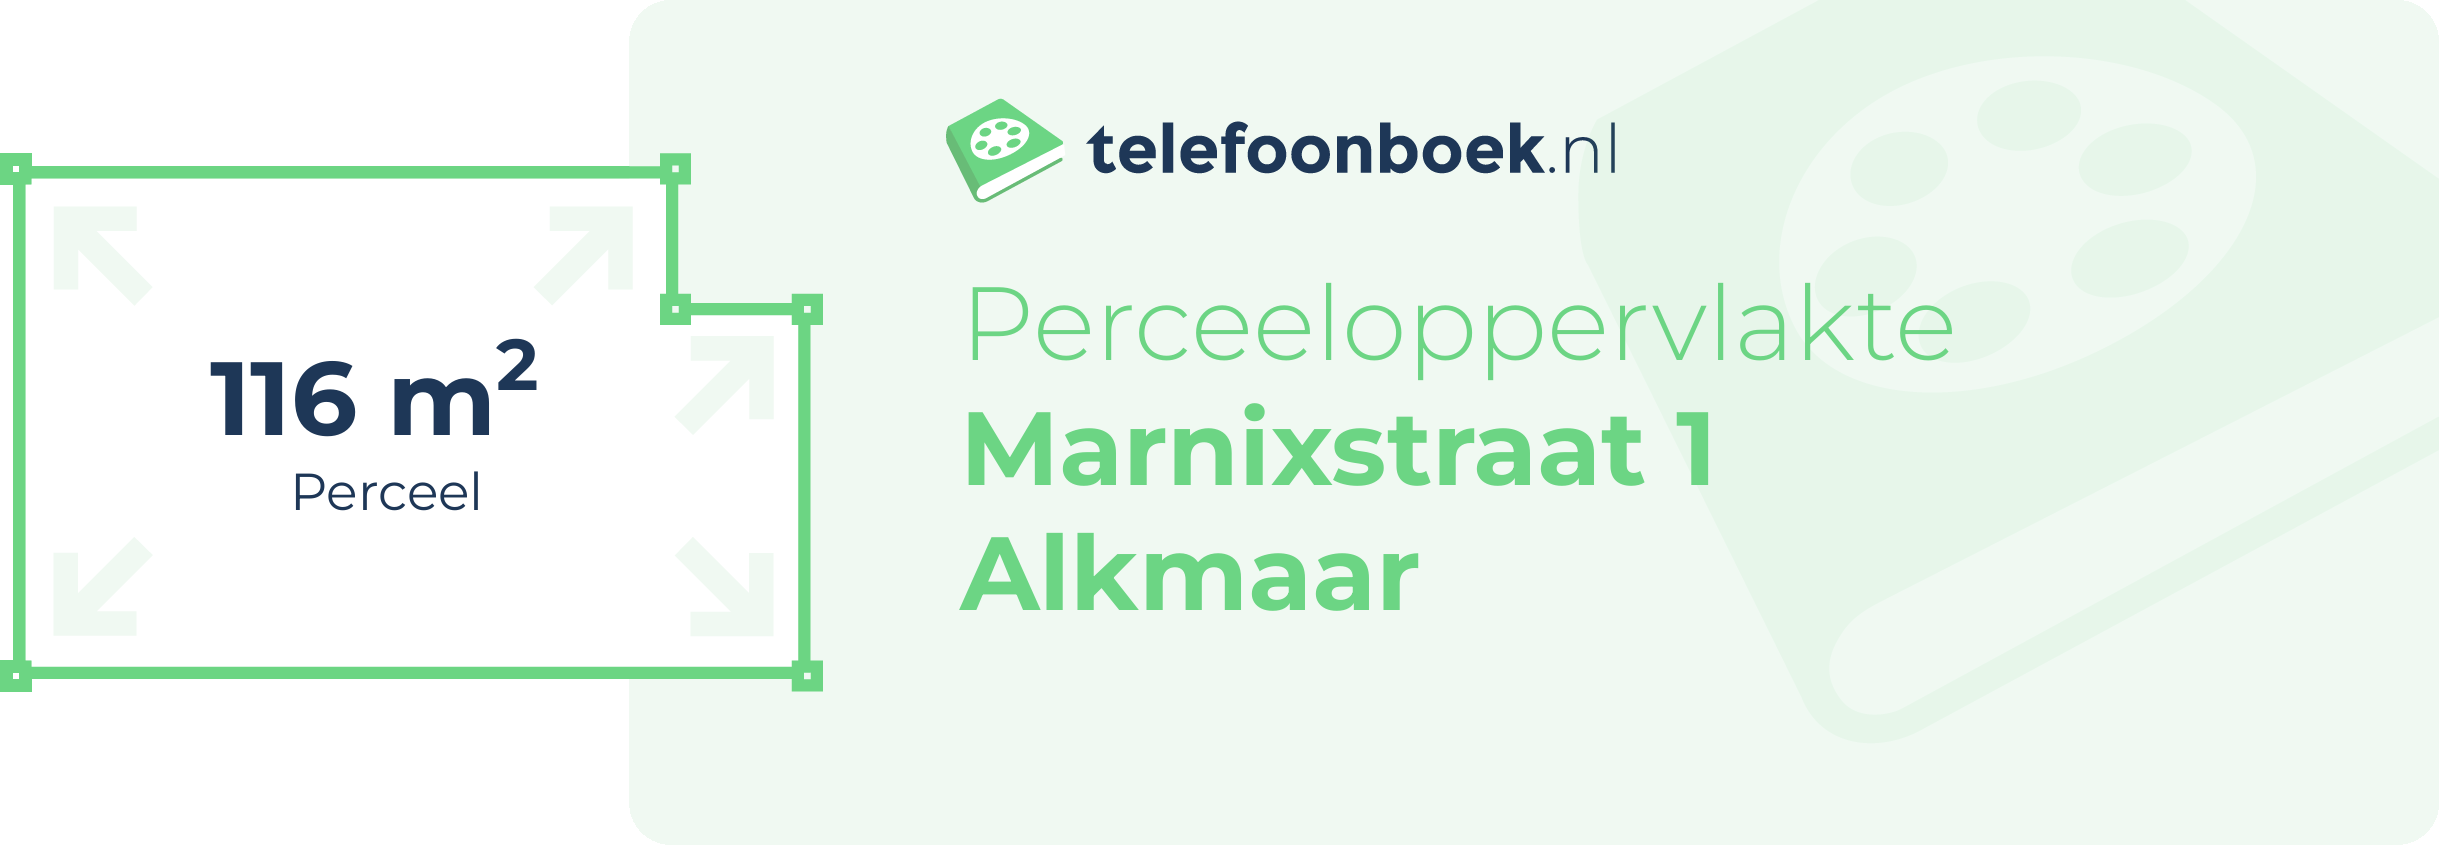 Perceeloppervlakte Marnixstraat 1 Alkmaar